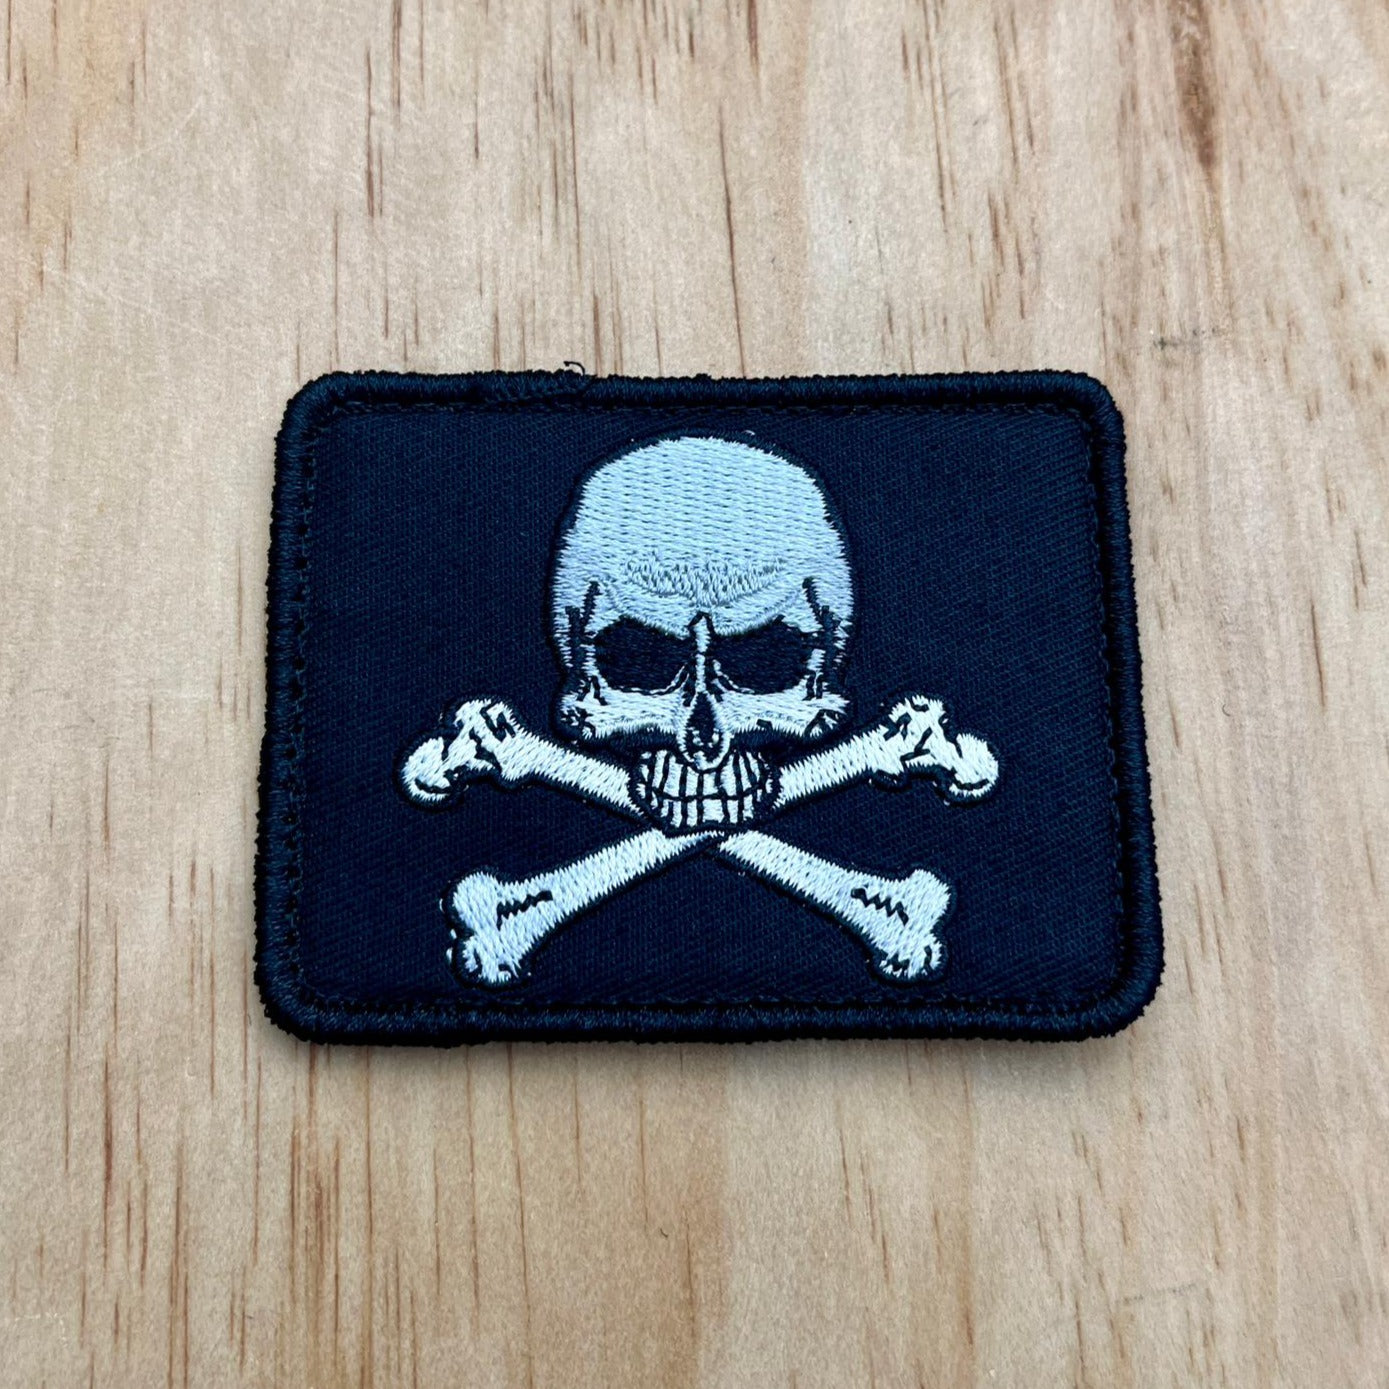 Skull & Bones patch